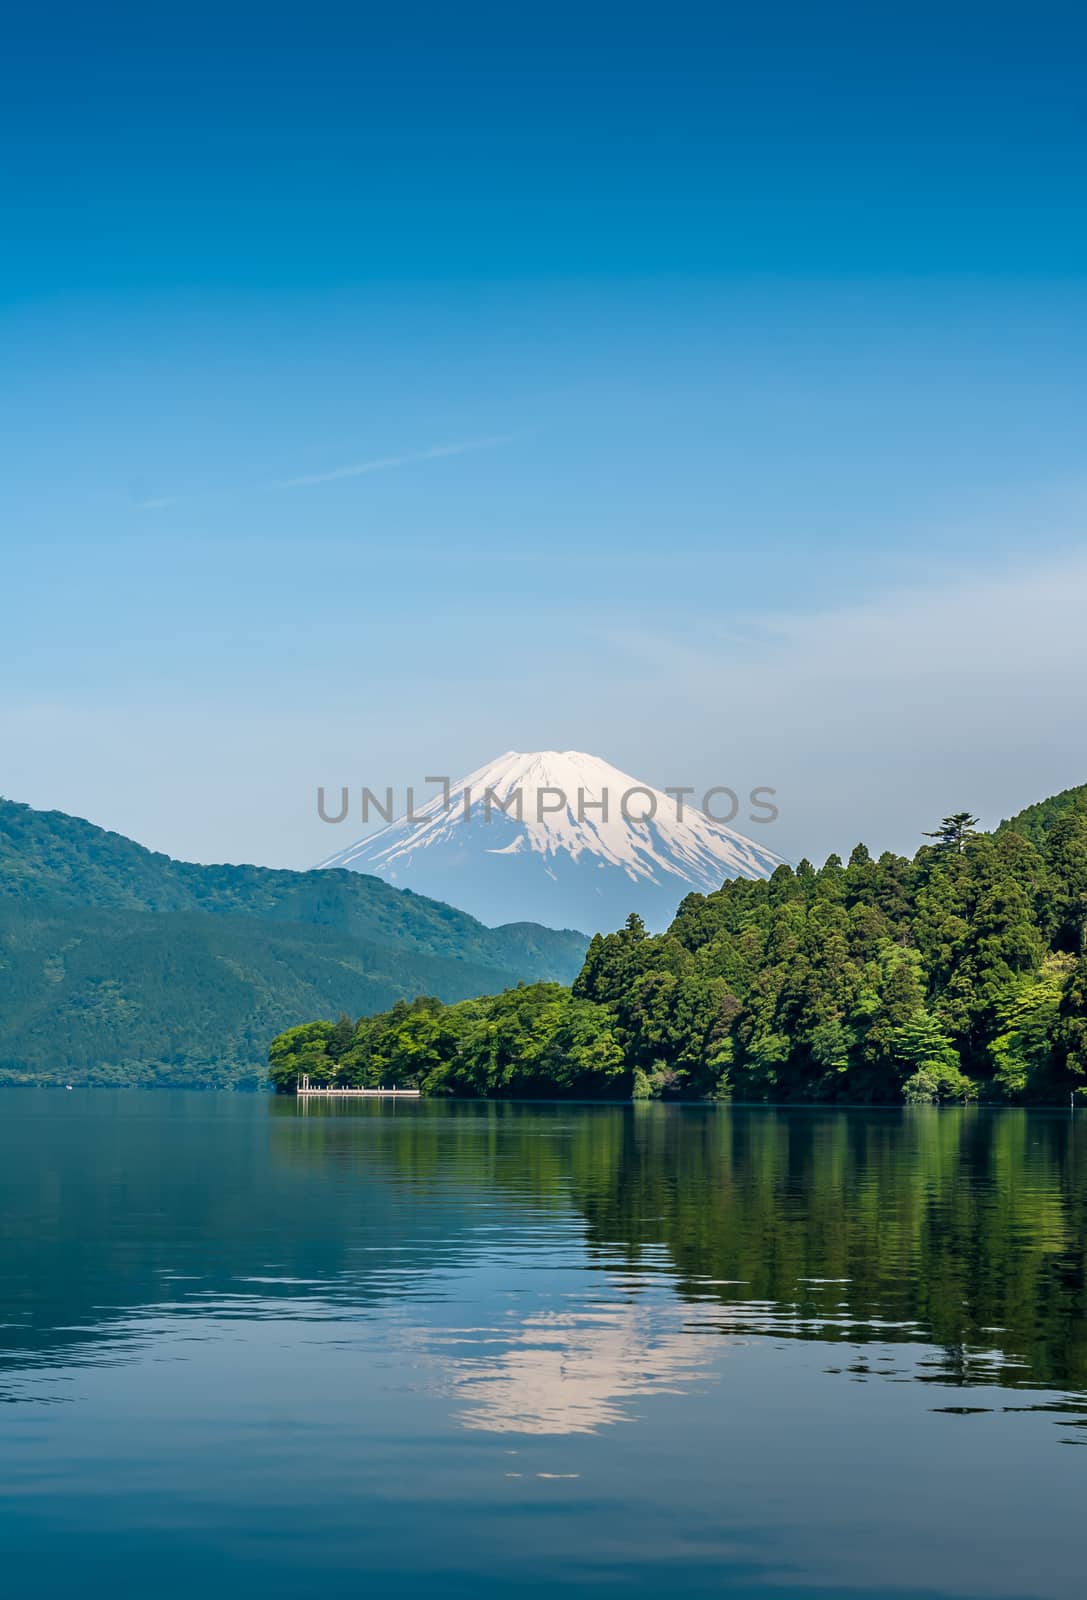 Shores of Lake Ashi and Mount Fuji from Moto-Hakone in Japan